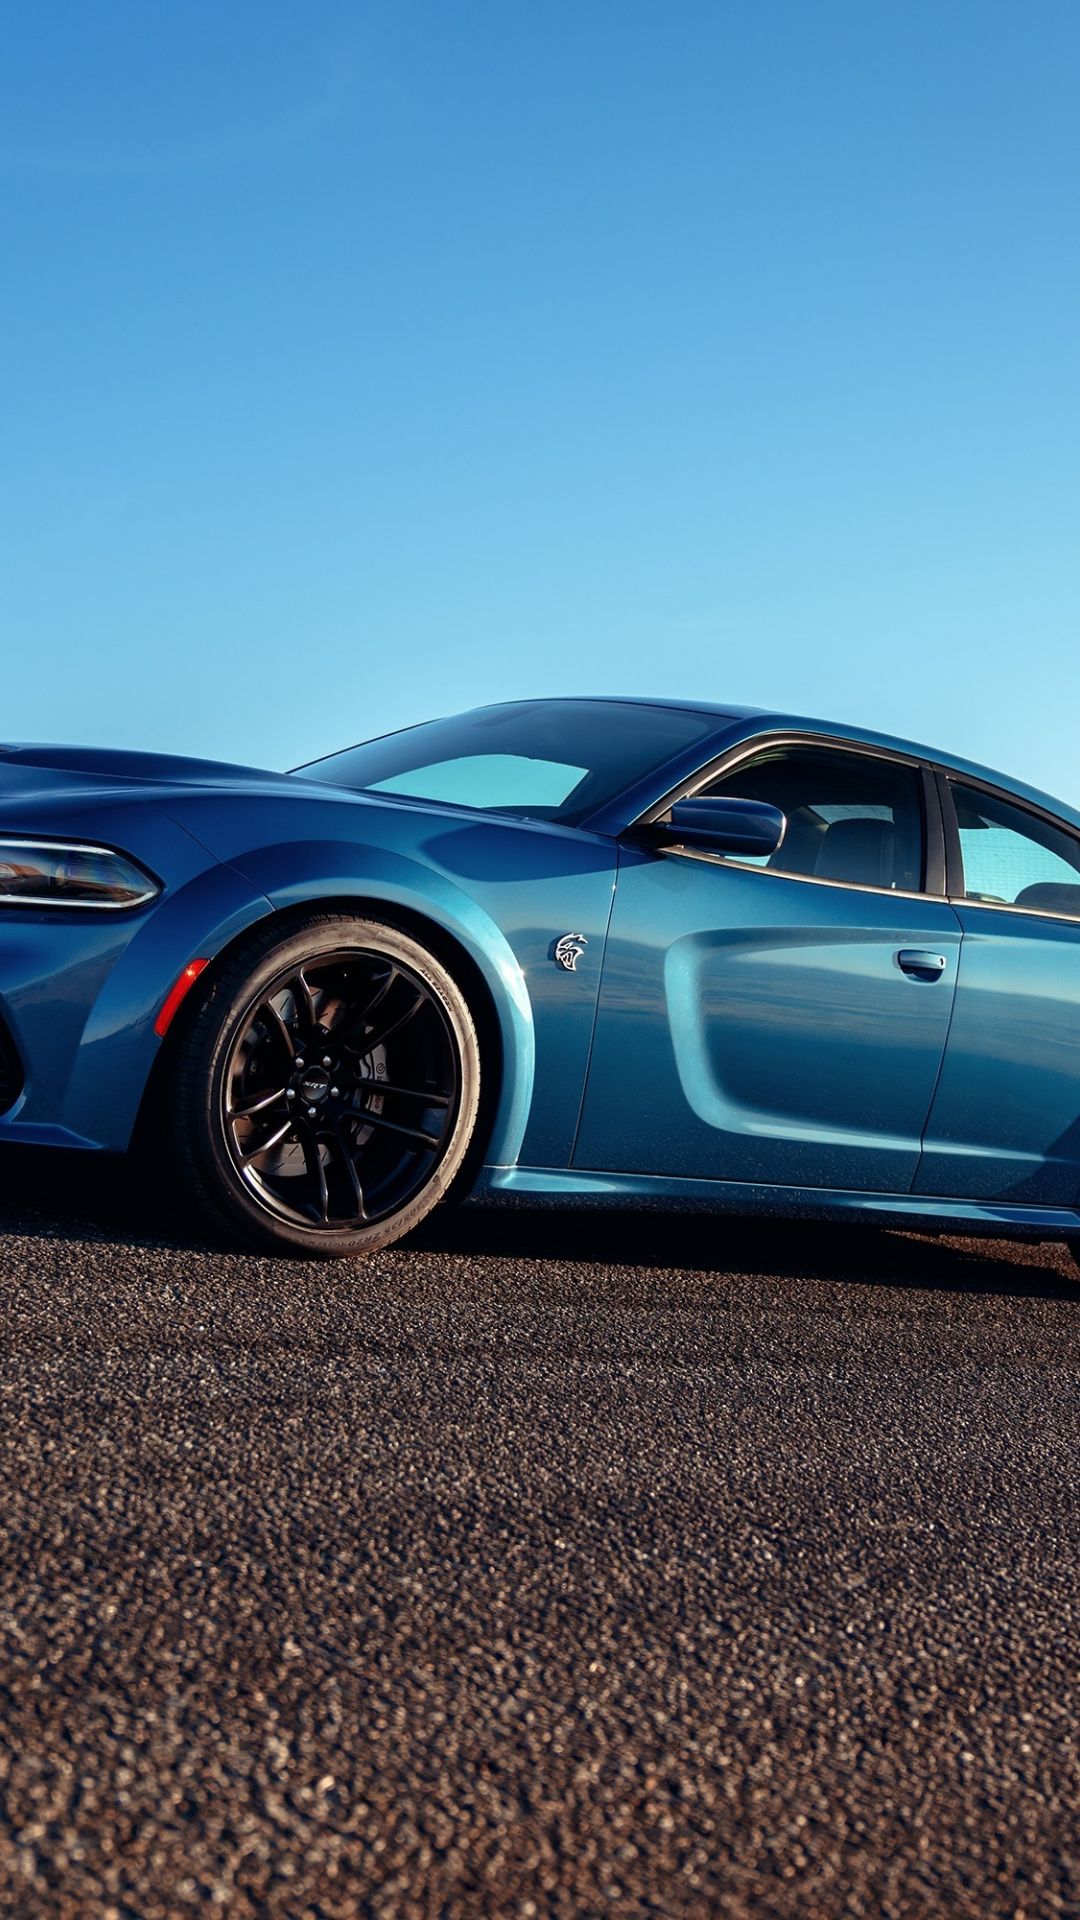 Blue car, Dodge Charger SRT Hellcat, 2019 wallpaper. Charger srt hellcat, Dodge charger srt, Charger srt